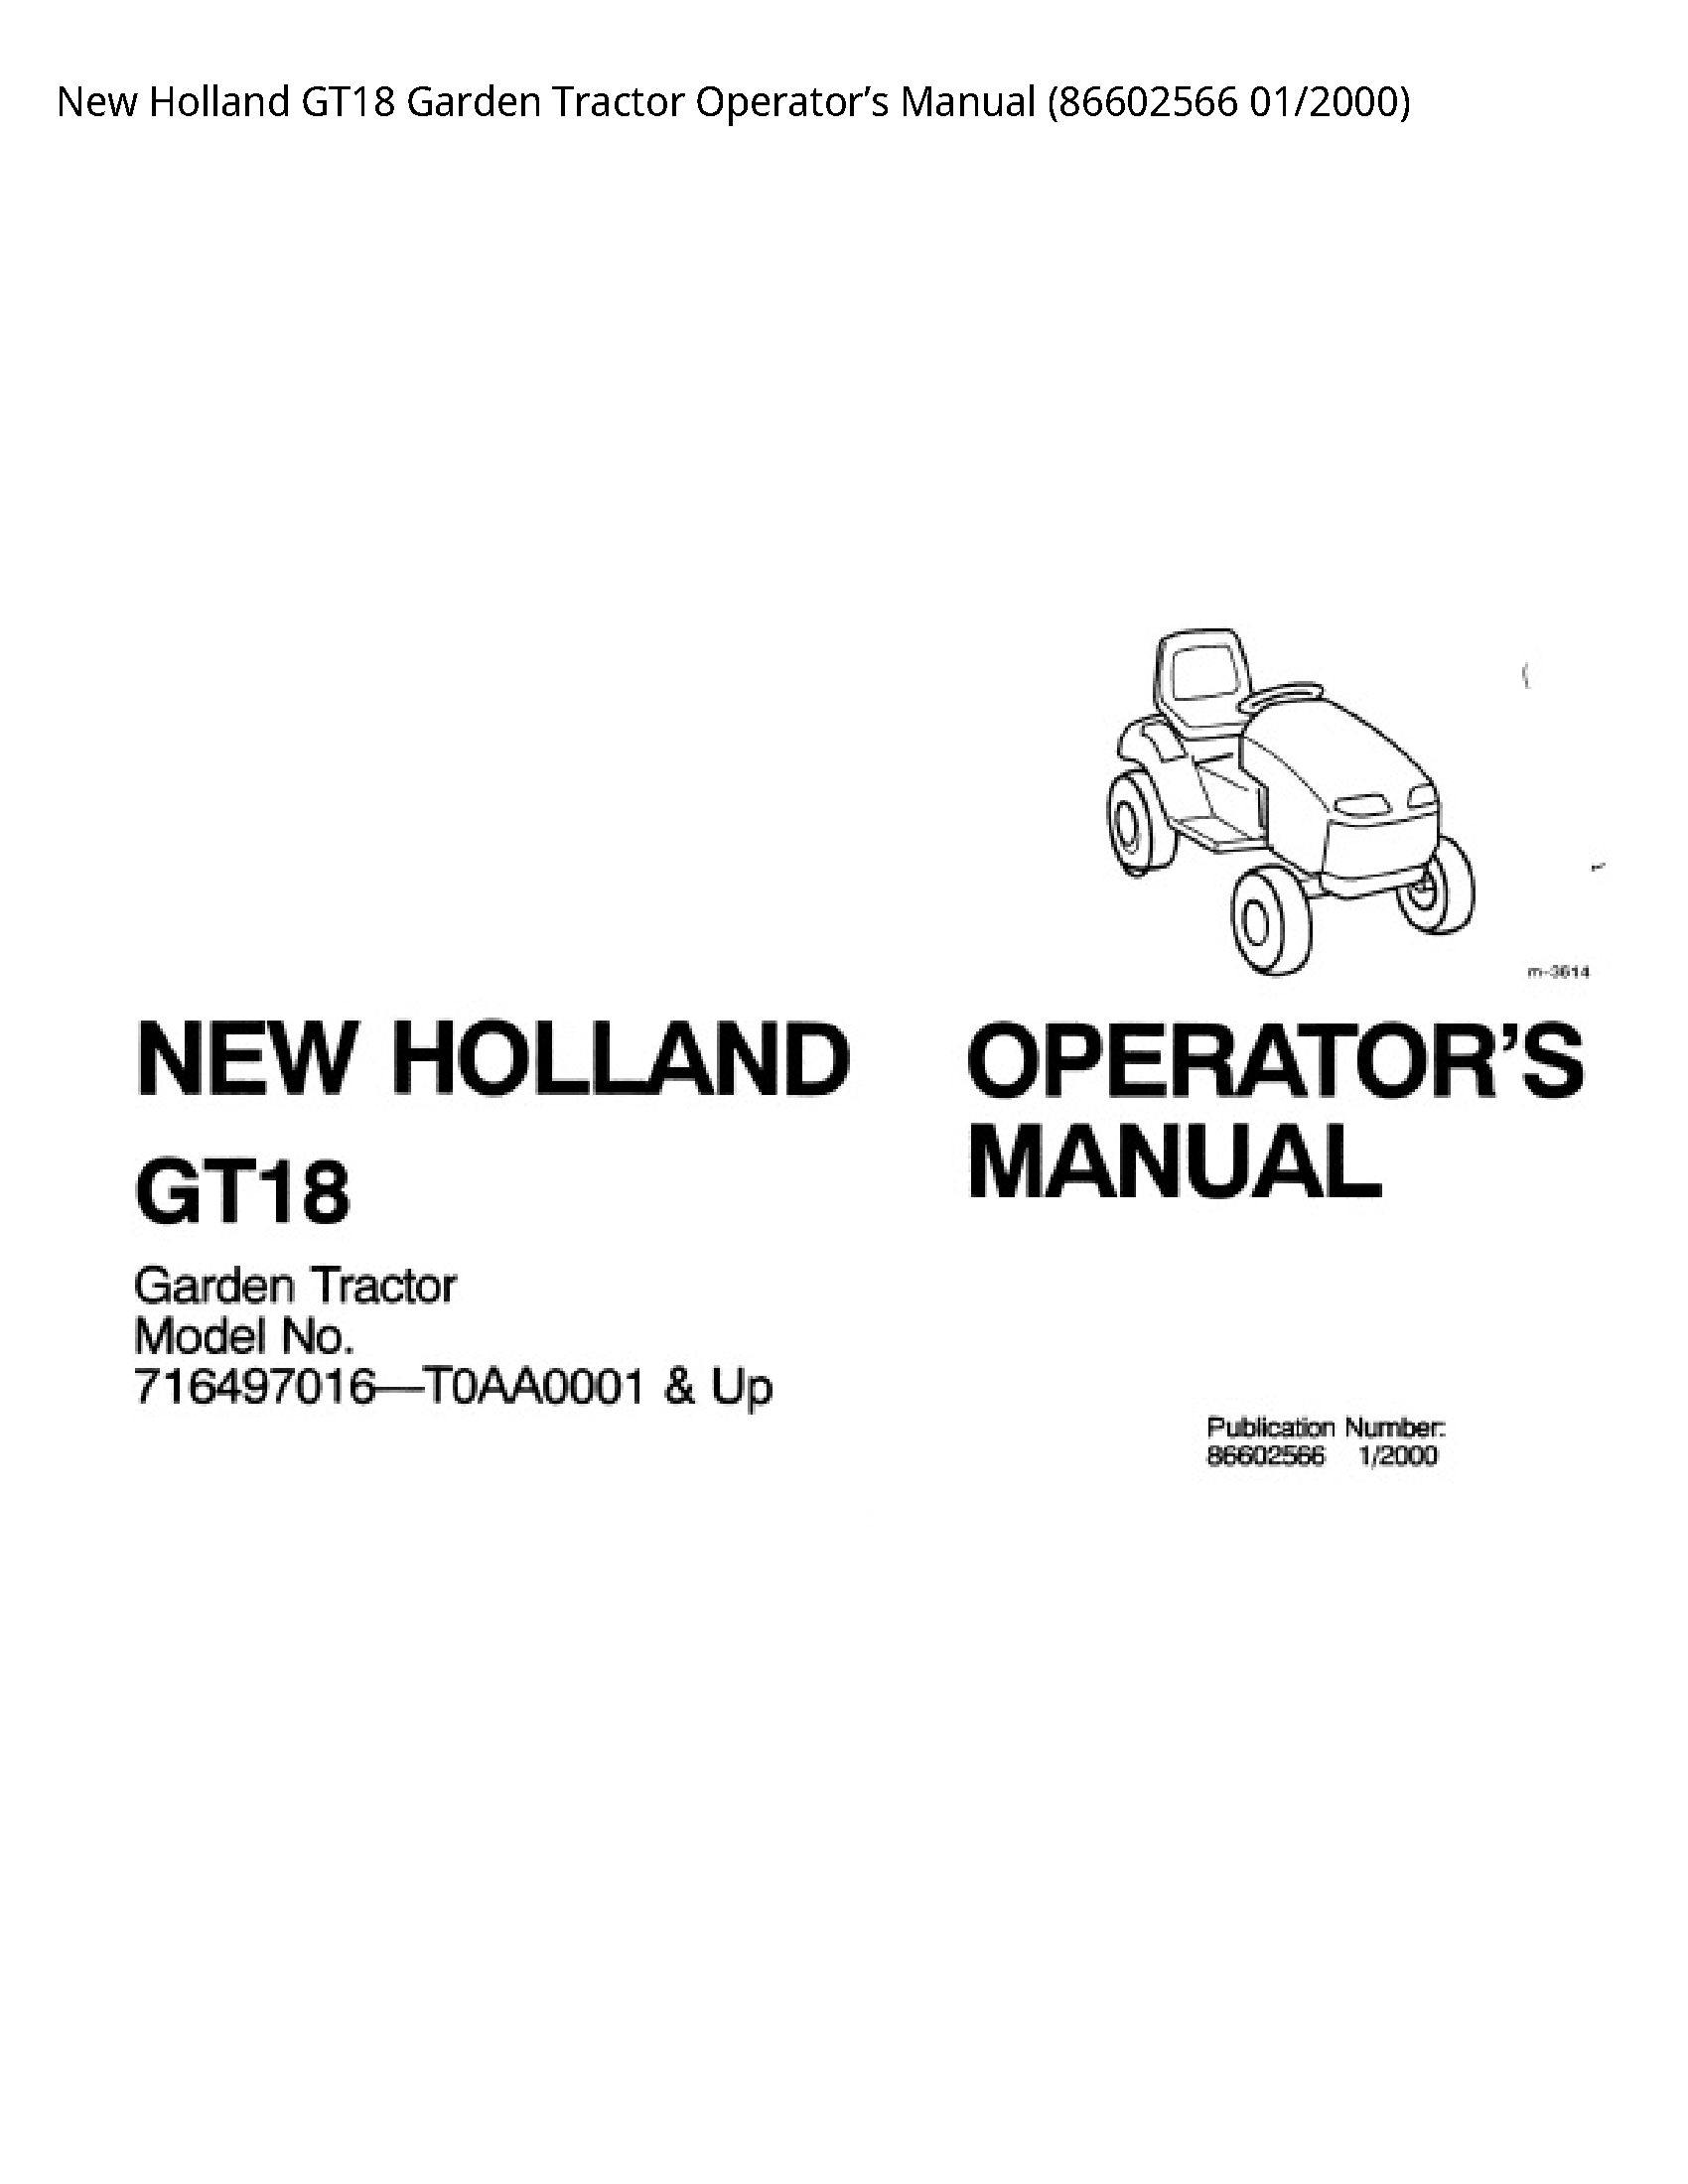 New Holland GT18 Garden Tractor Operator’s manual